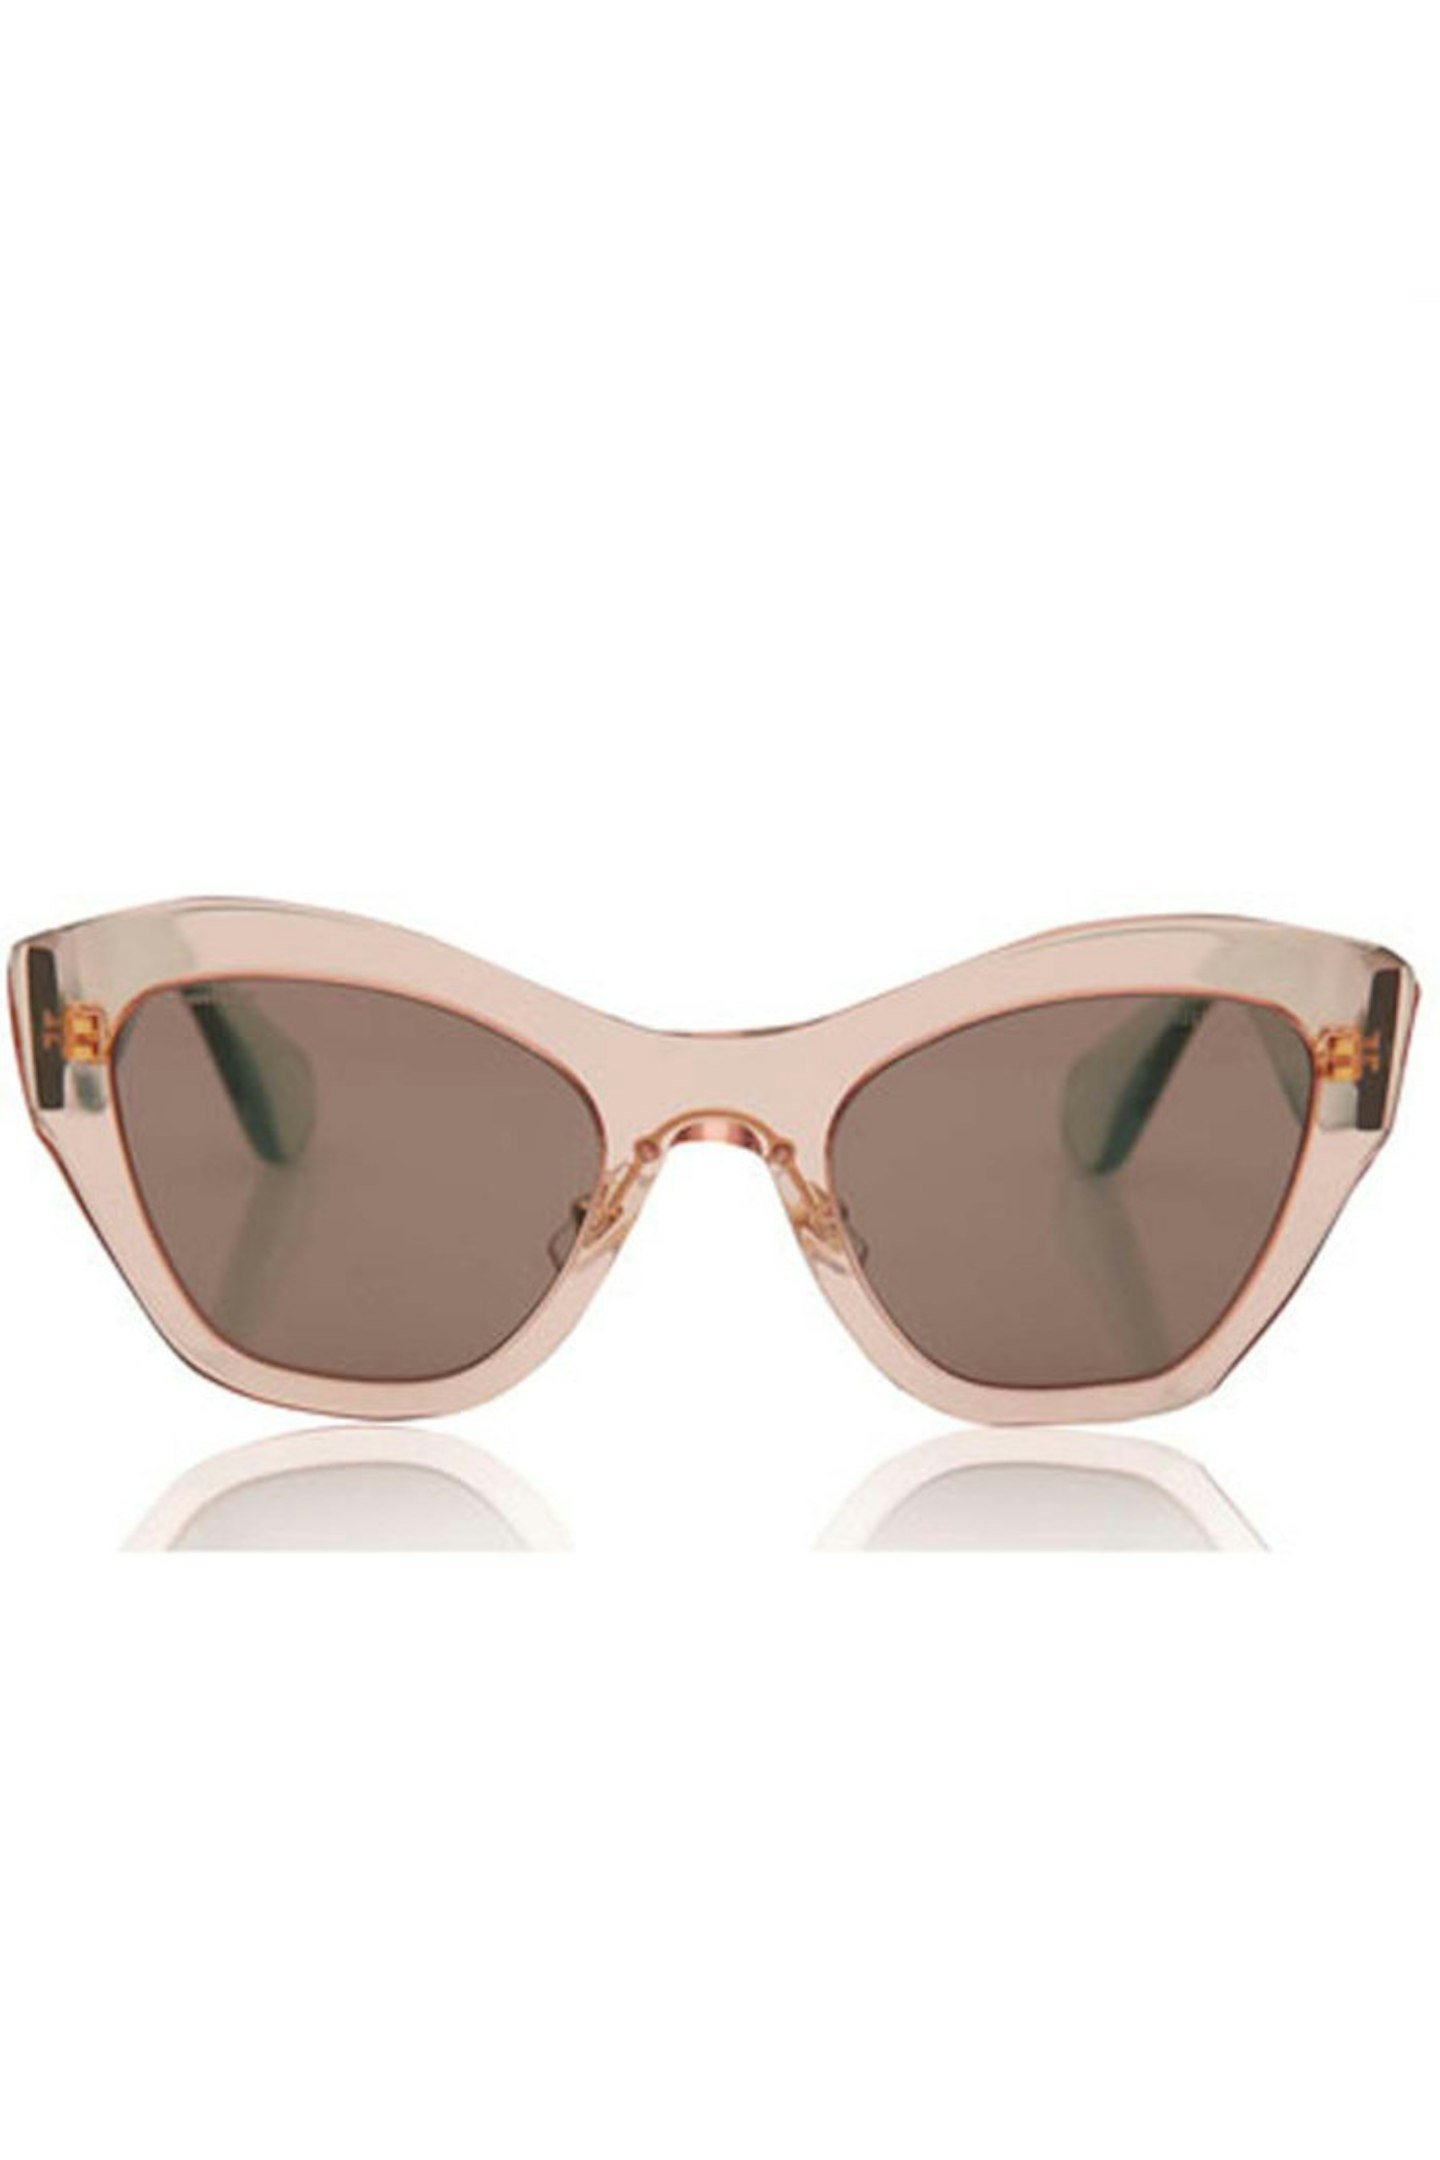 Pink Thick Fram Sunglasses, £175, Miu Miu at Liberty